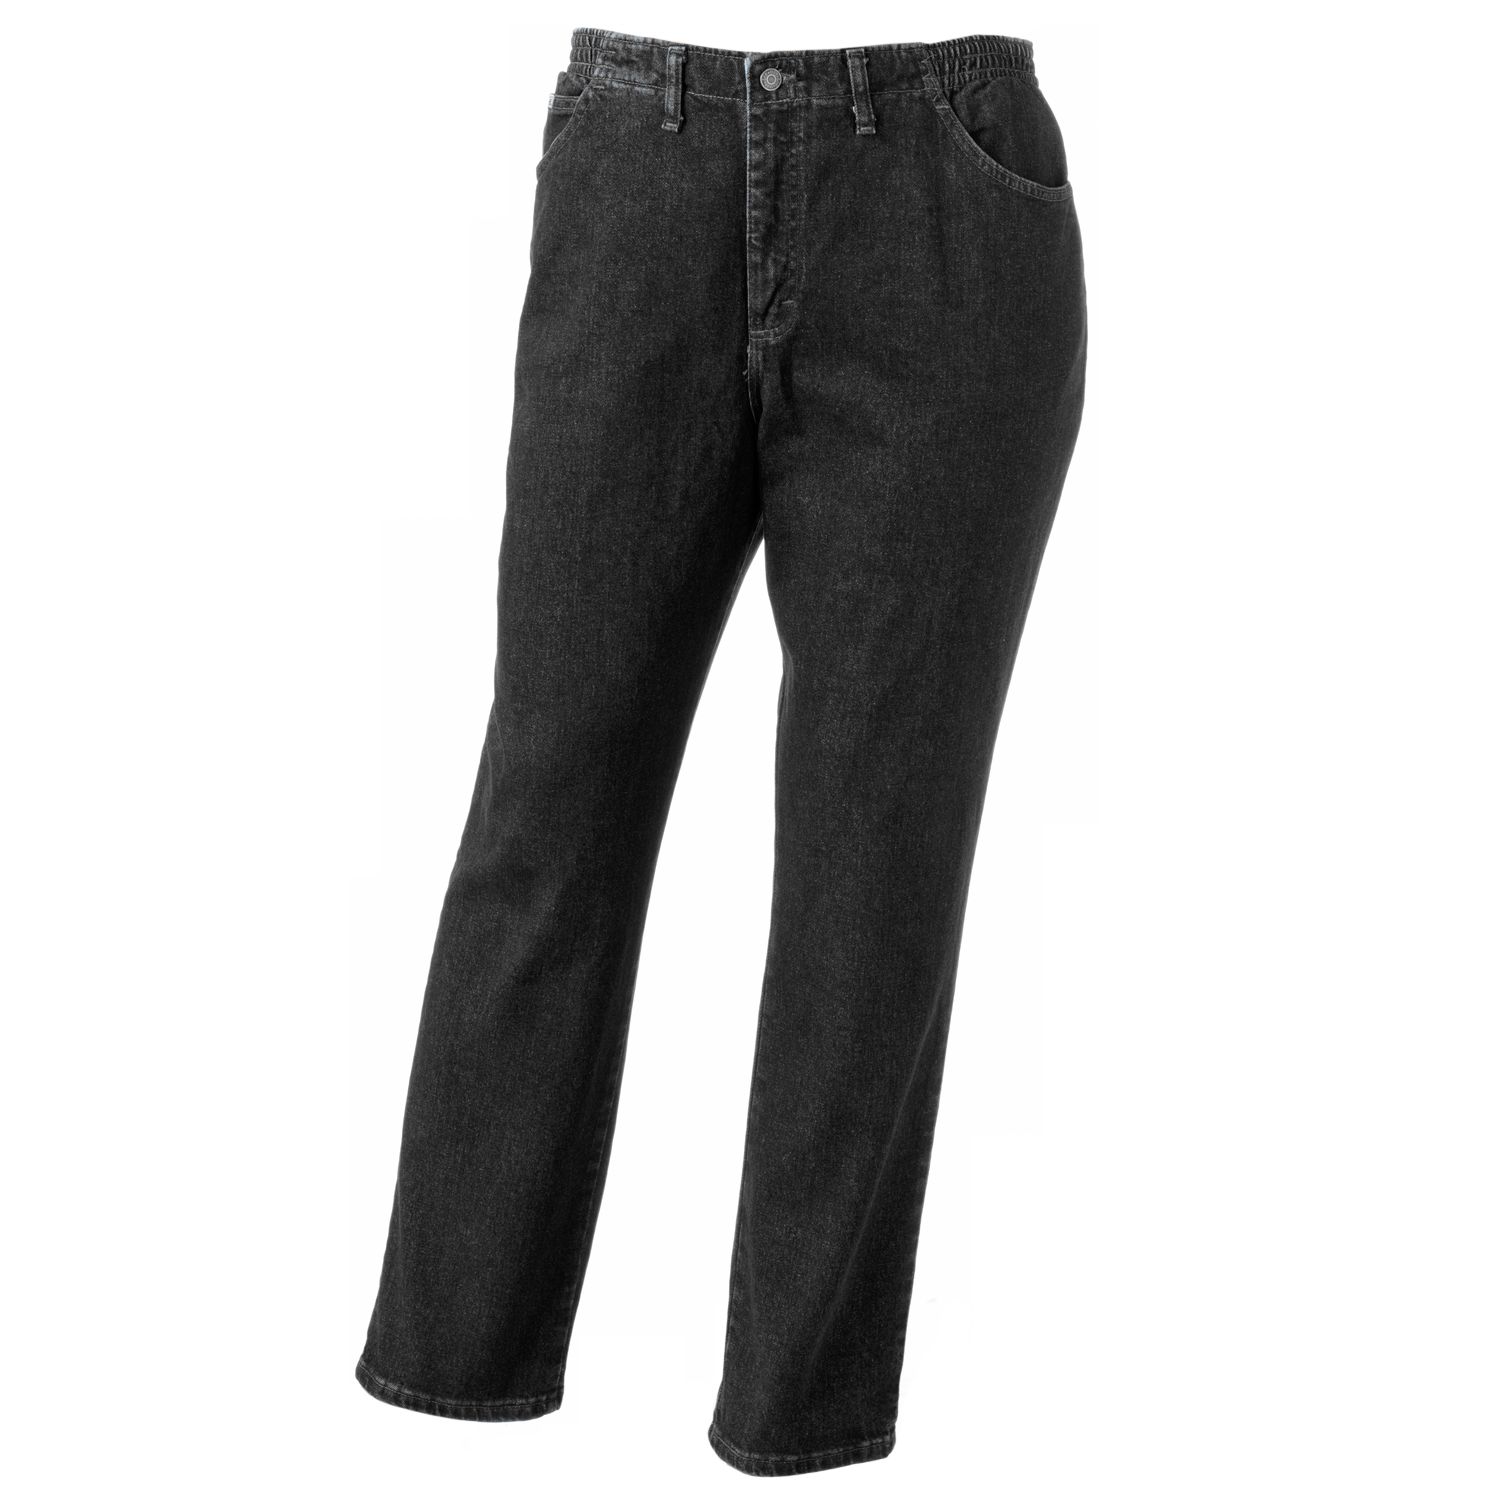 lee jeans side elastic waist